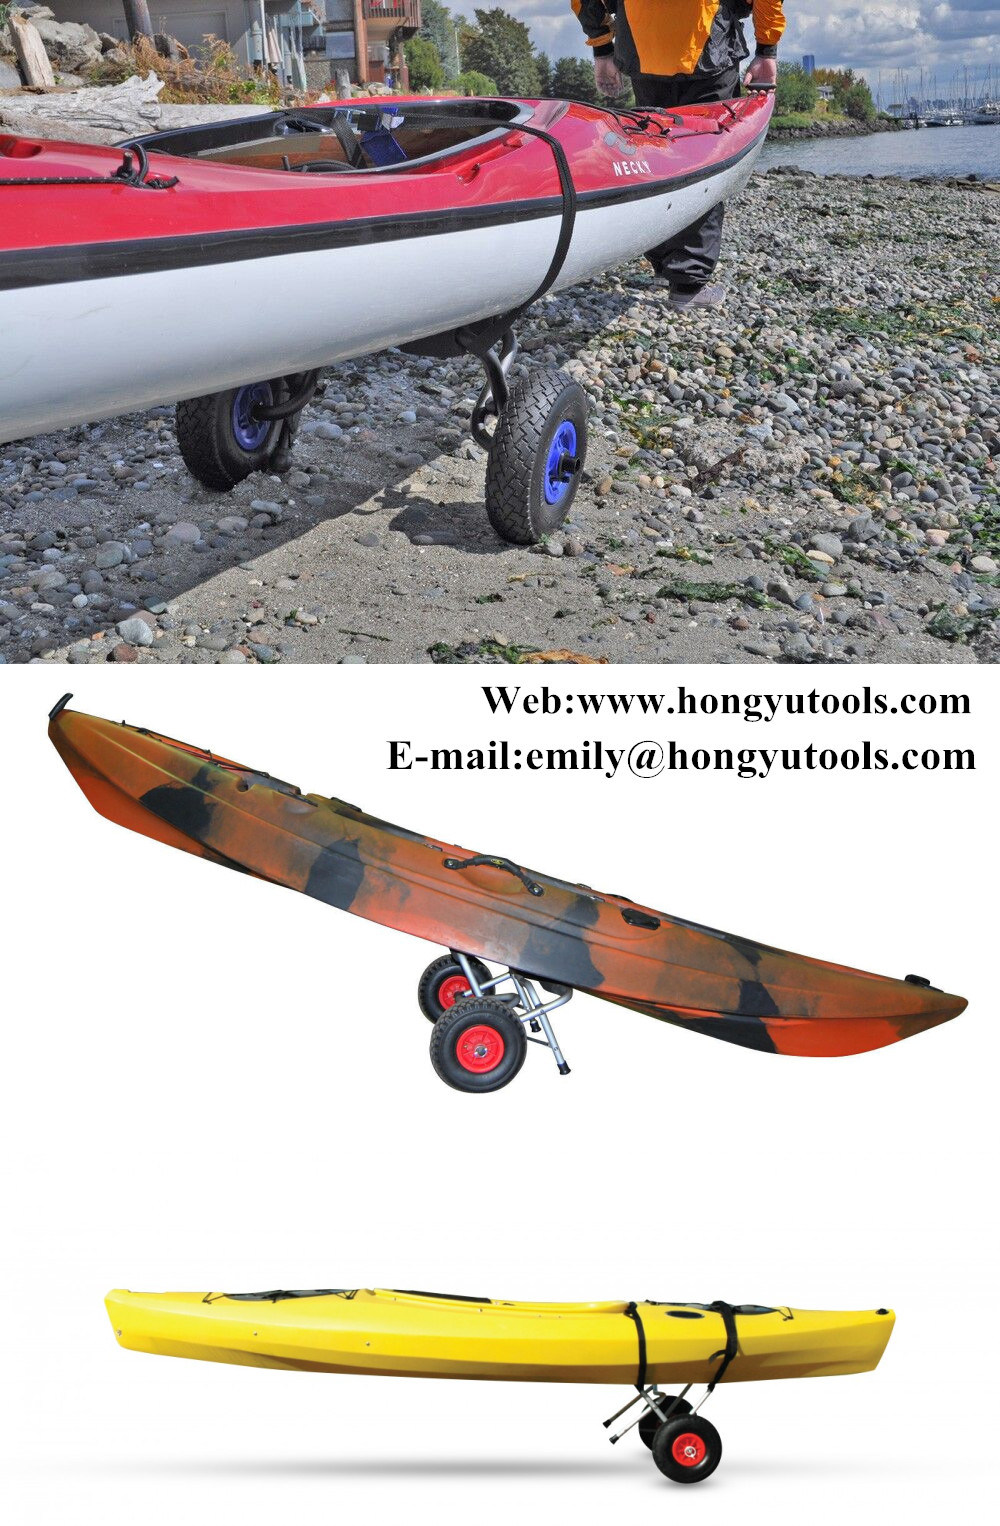 Aluminum Kayak & Canoe Trolley Fdw-Ky15